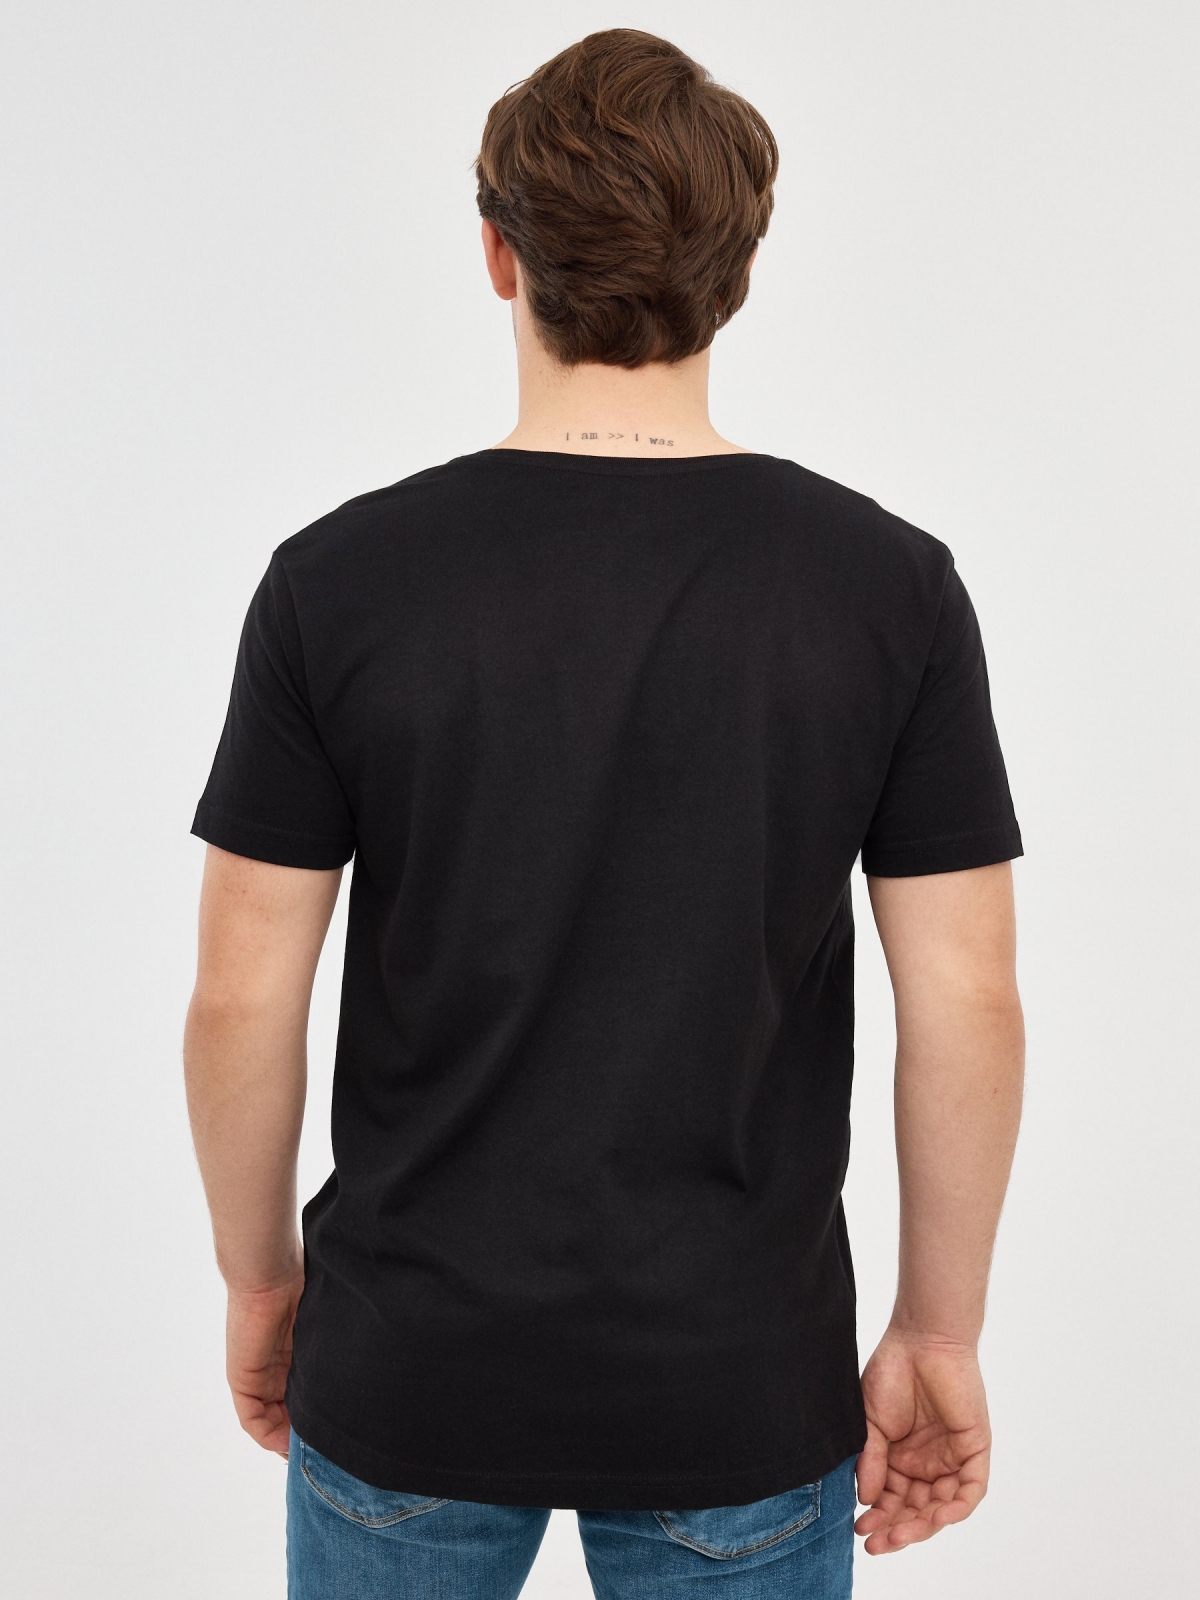 Camiseta básica cuello pico negro vista media trasera